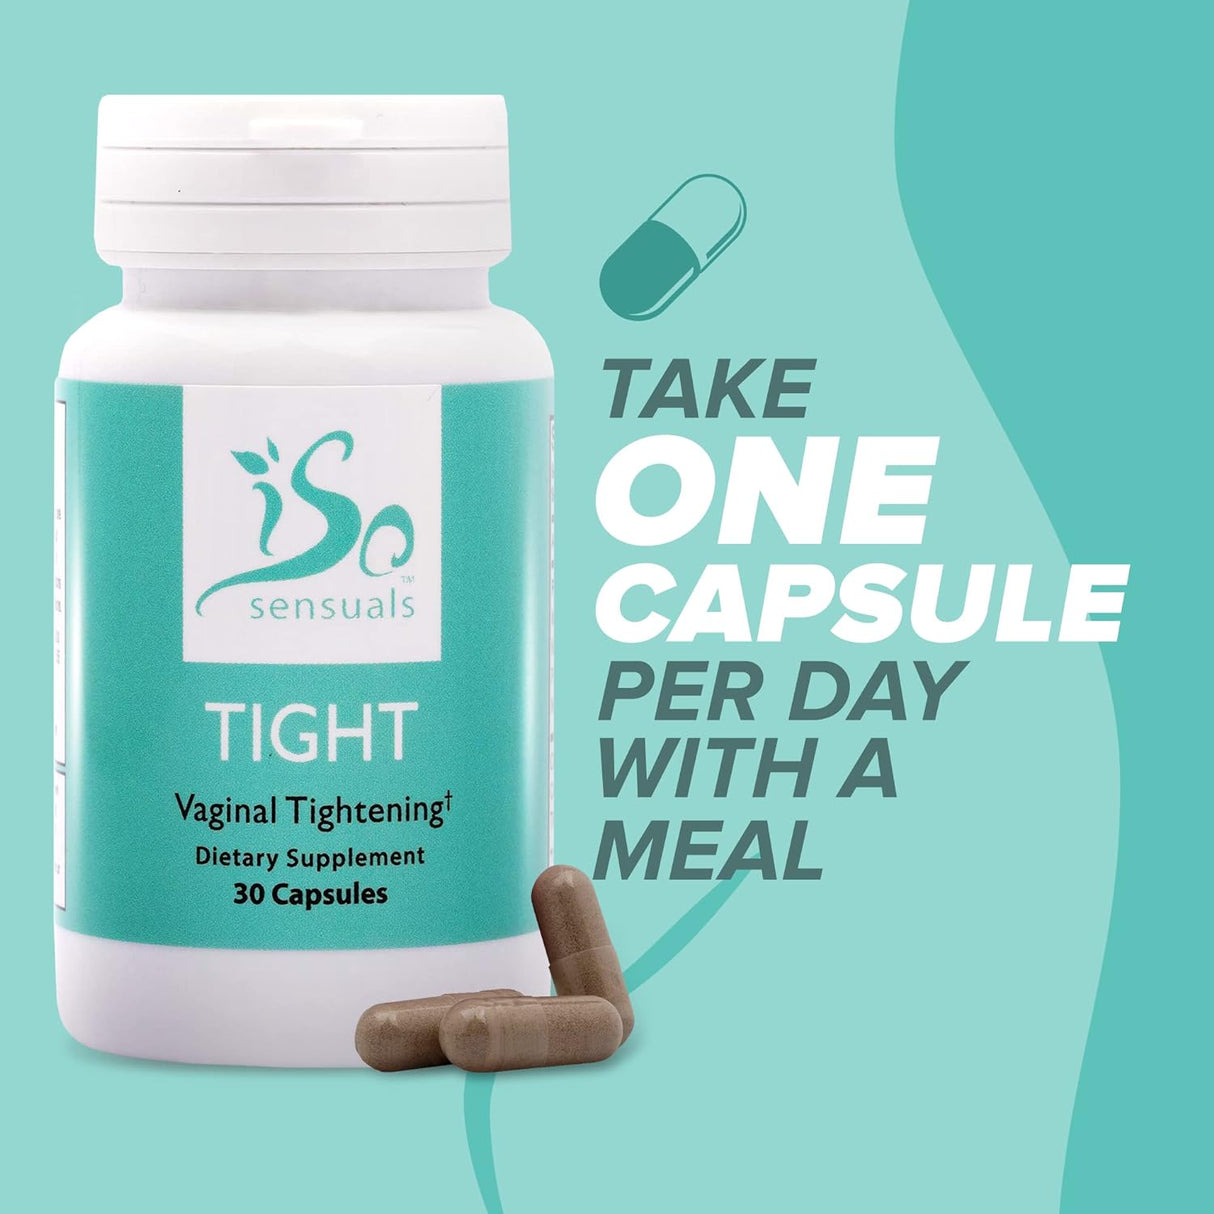 IsoSensuals TIGHT Vaginal Tightening Pills 30 Capsulas